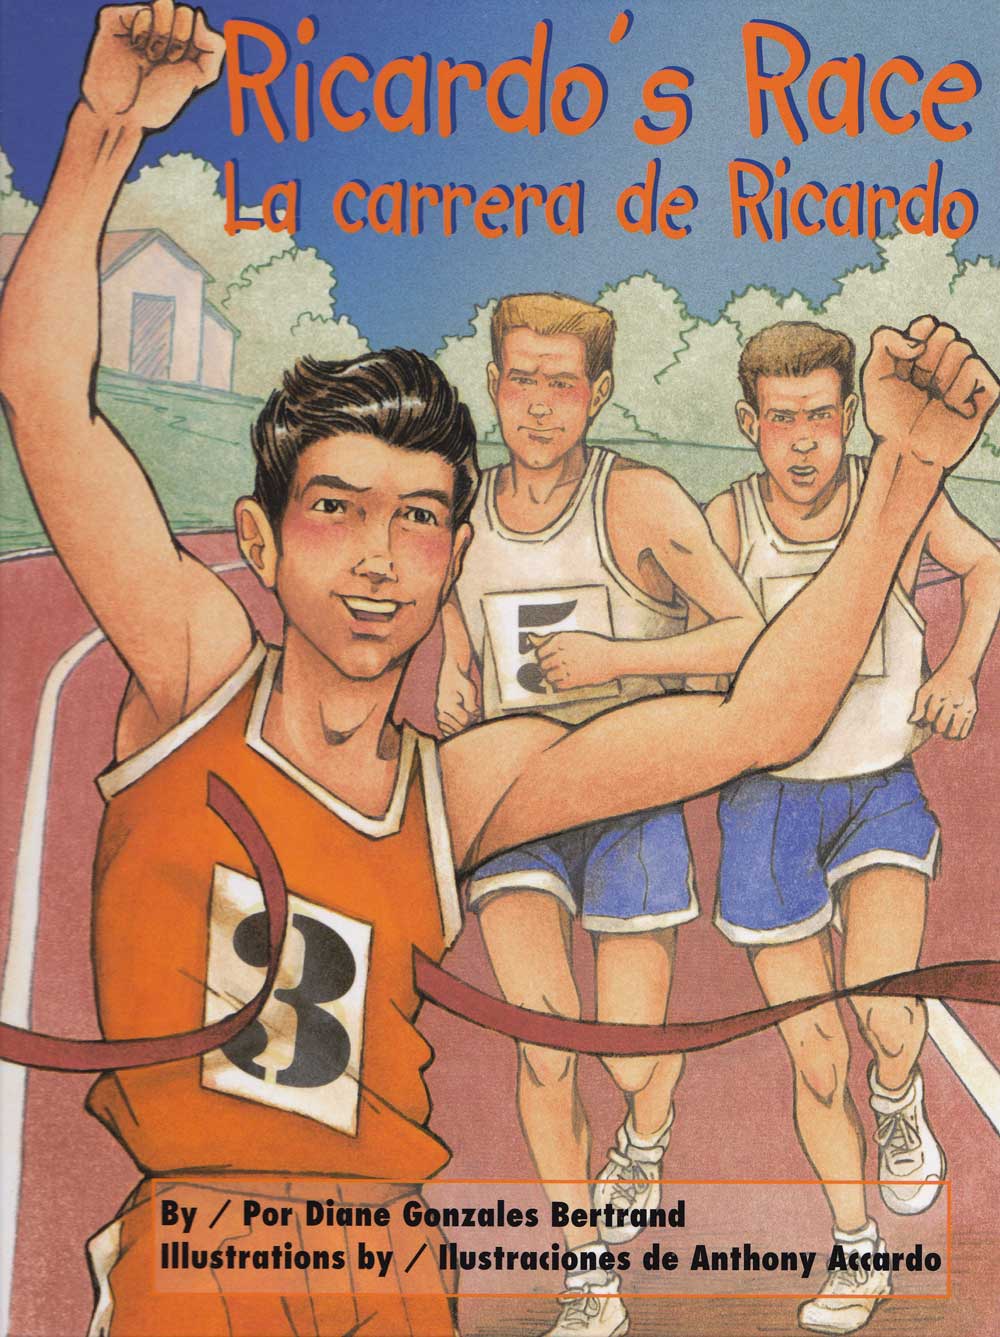 La carrera de Ricardo - Ricardos Race, Del Sol Books